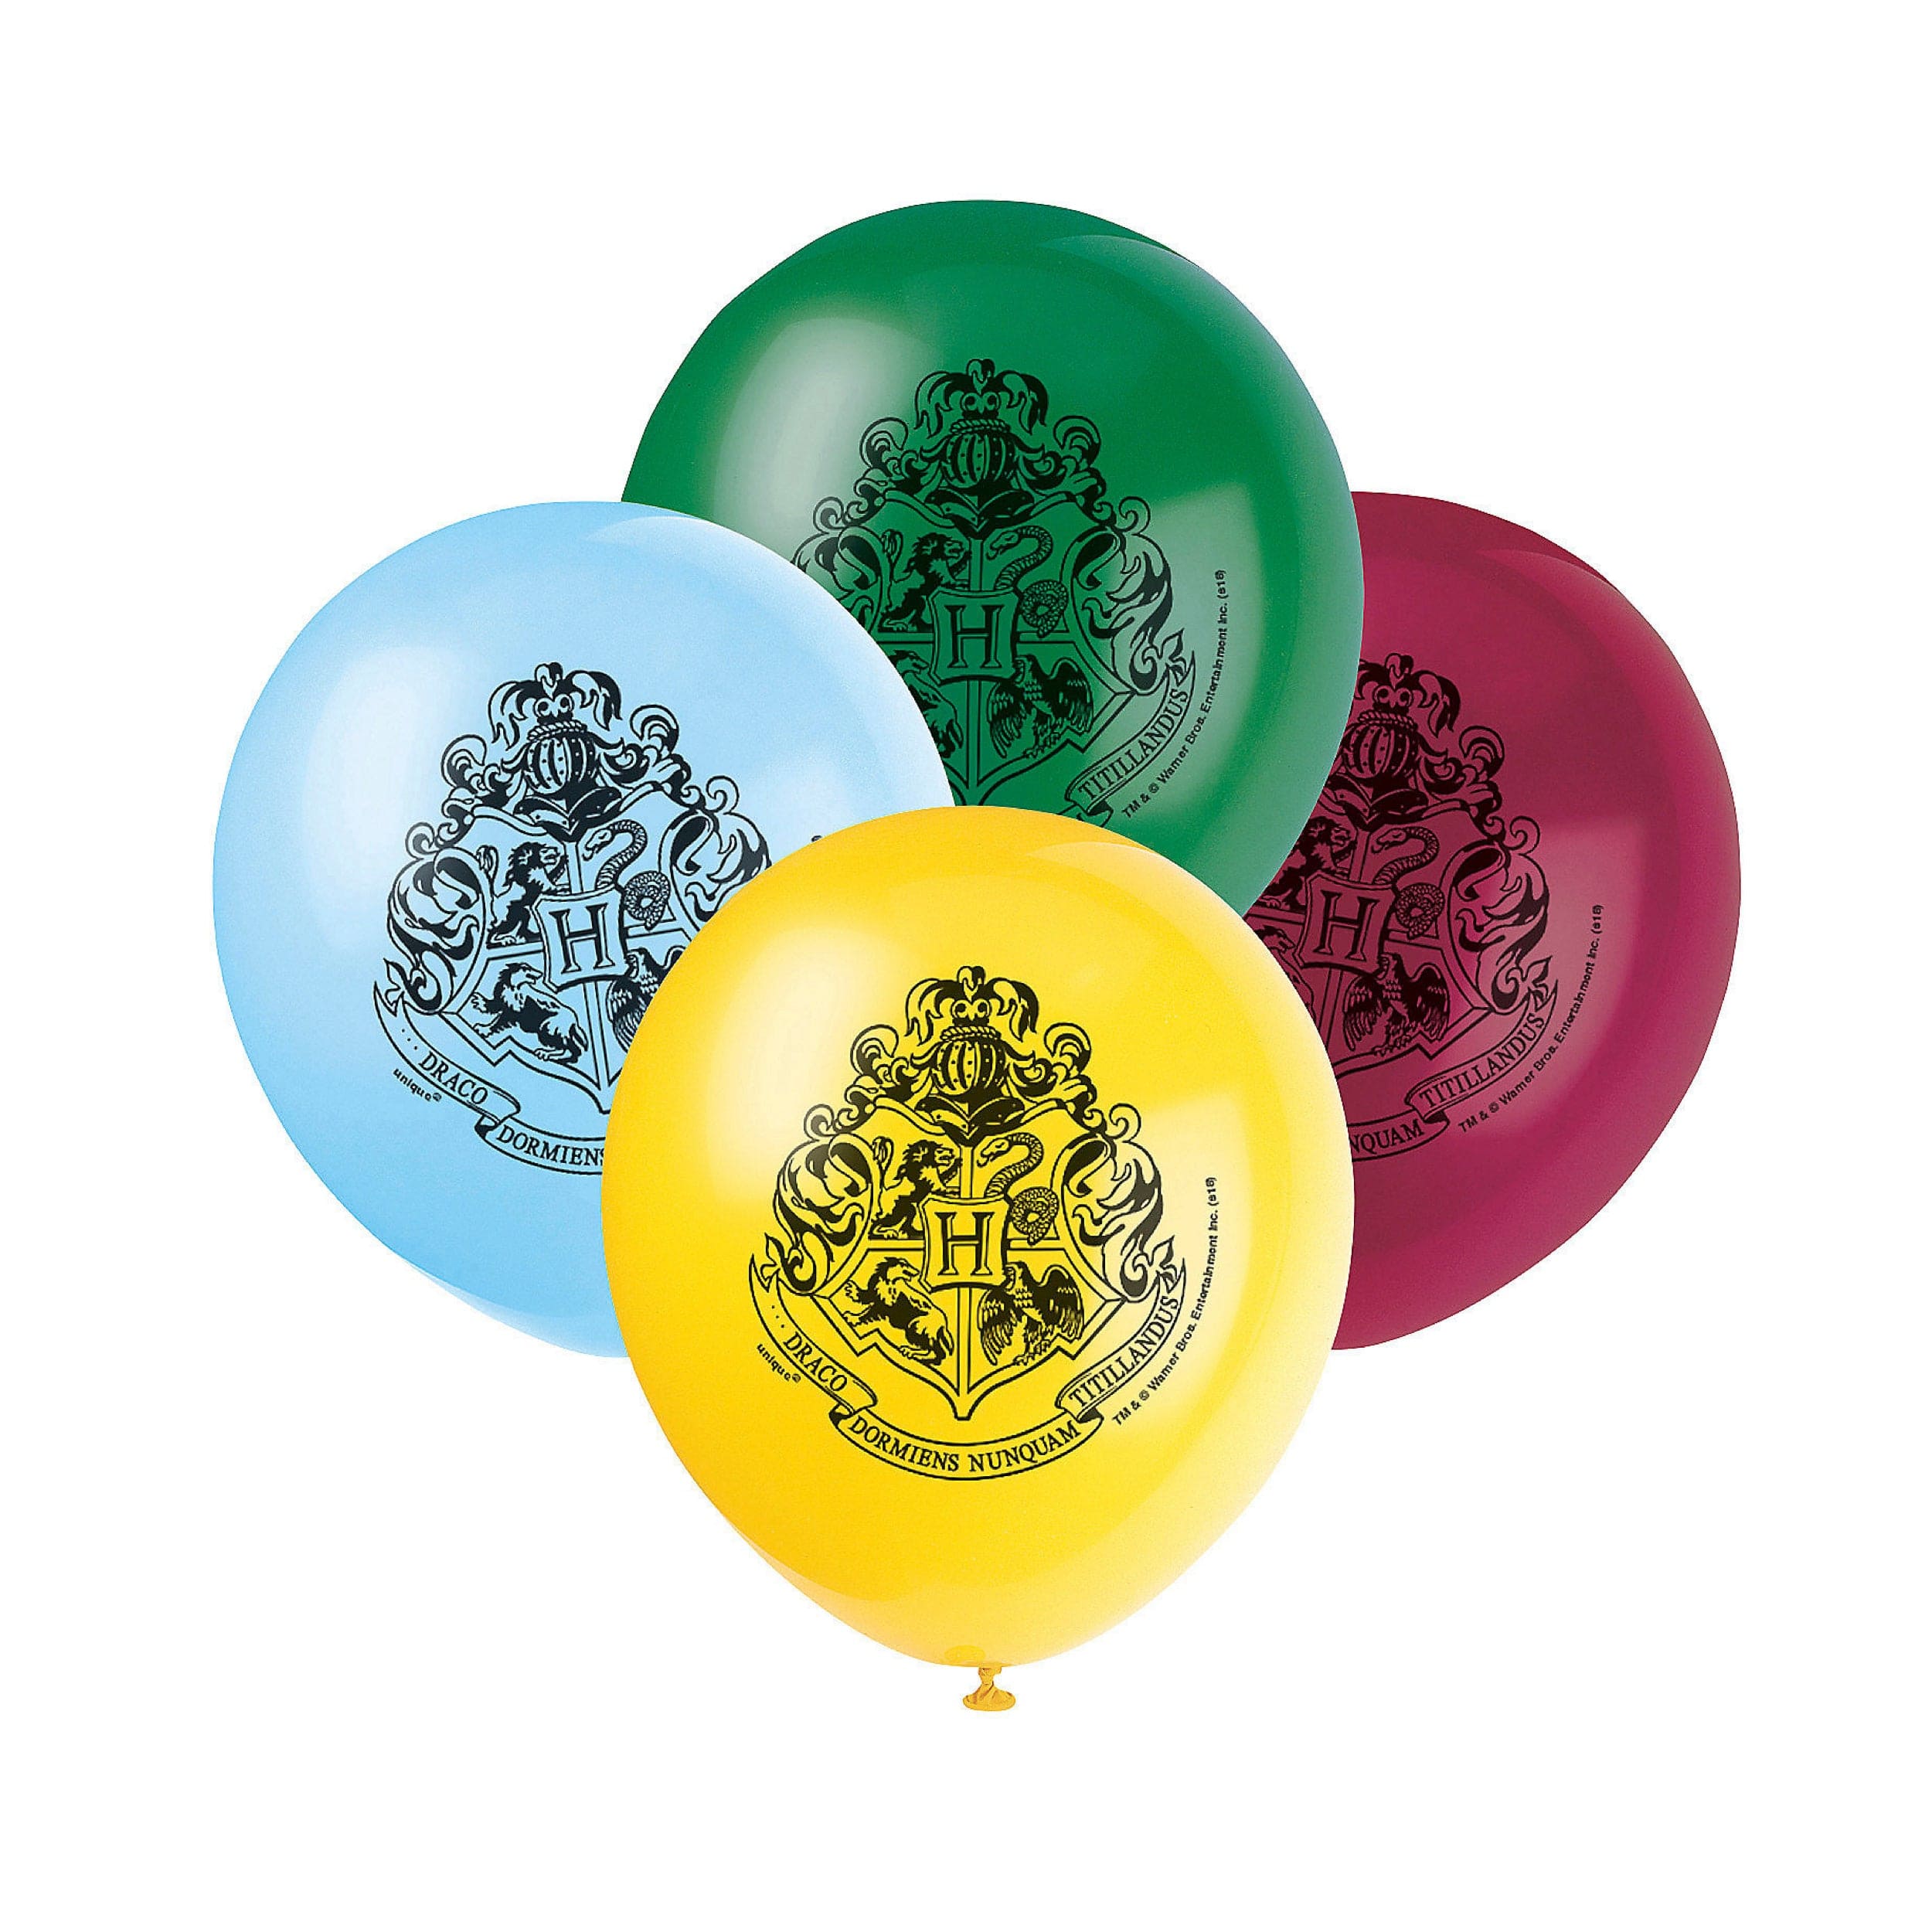 Hogwarts Crest Foil Balloon, 21in x 22in - Harry Potter